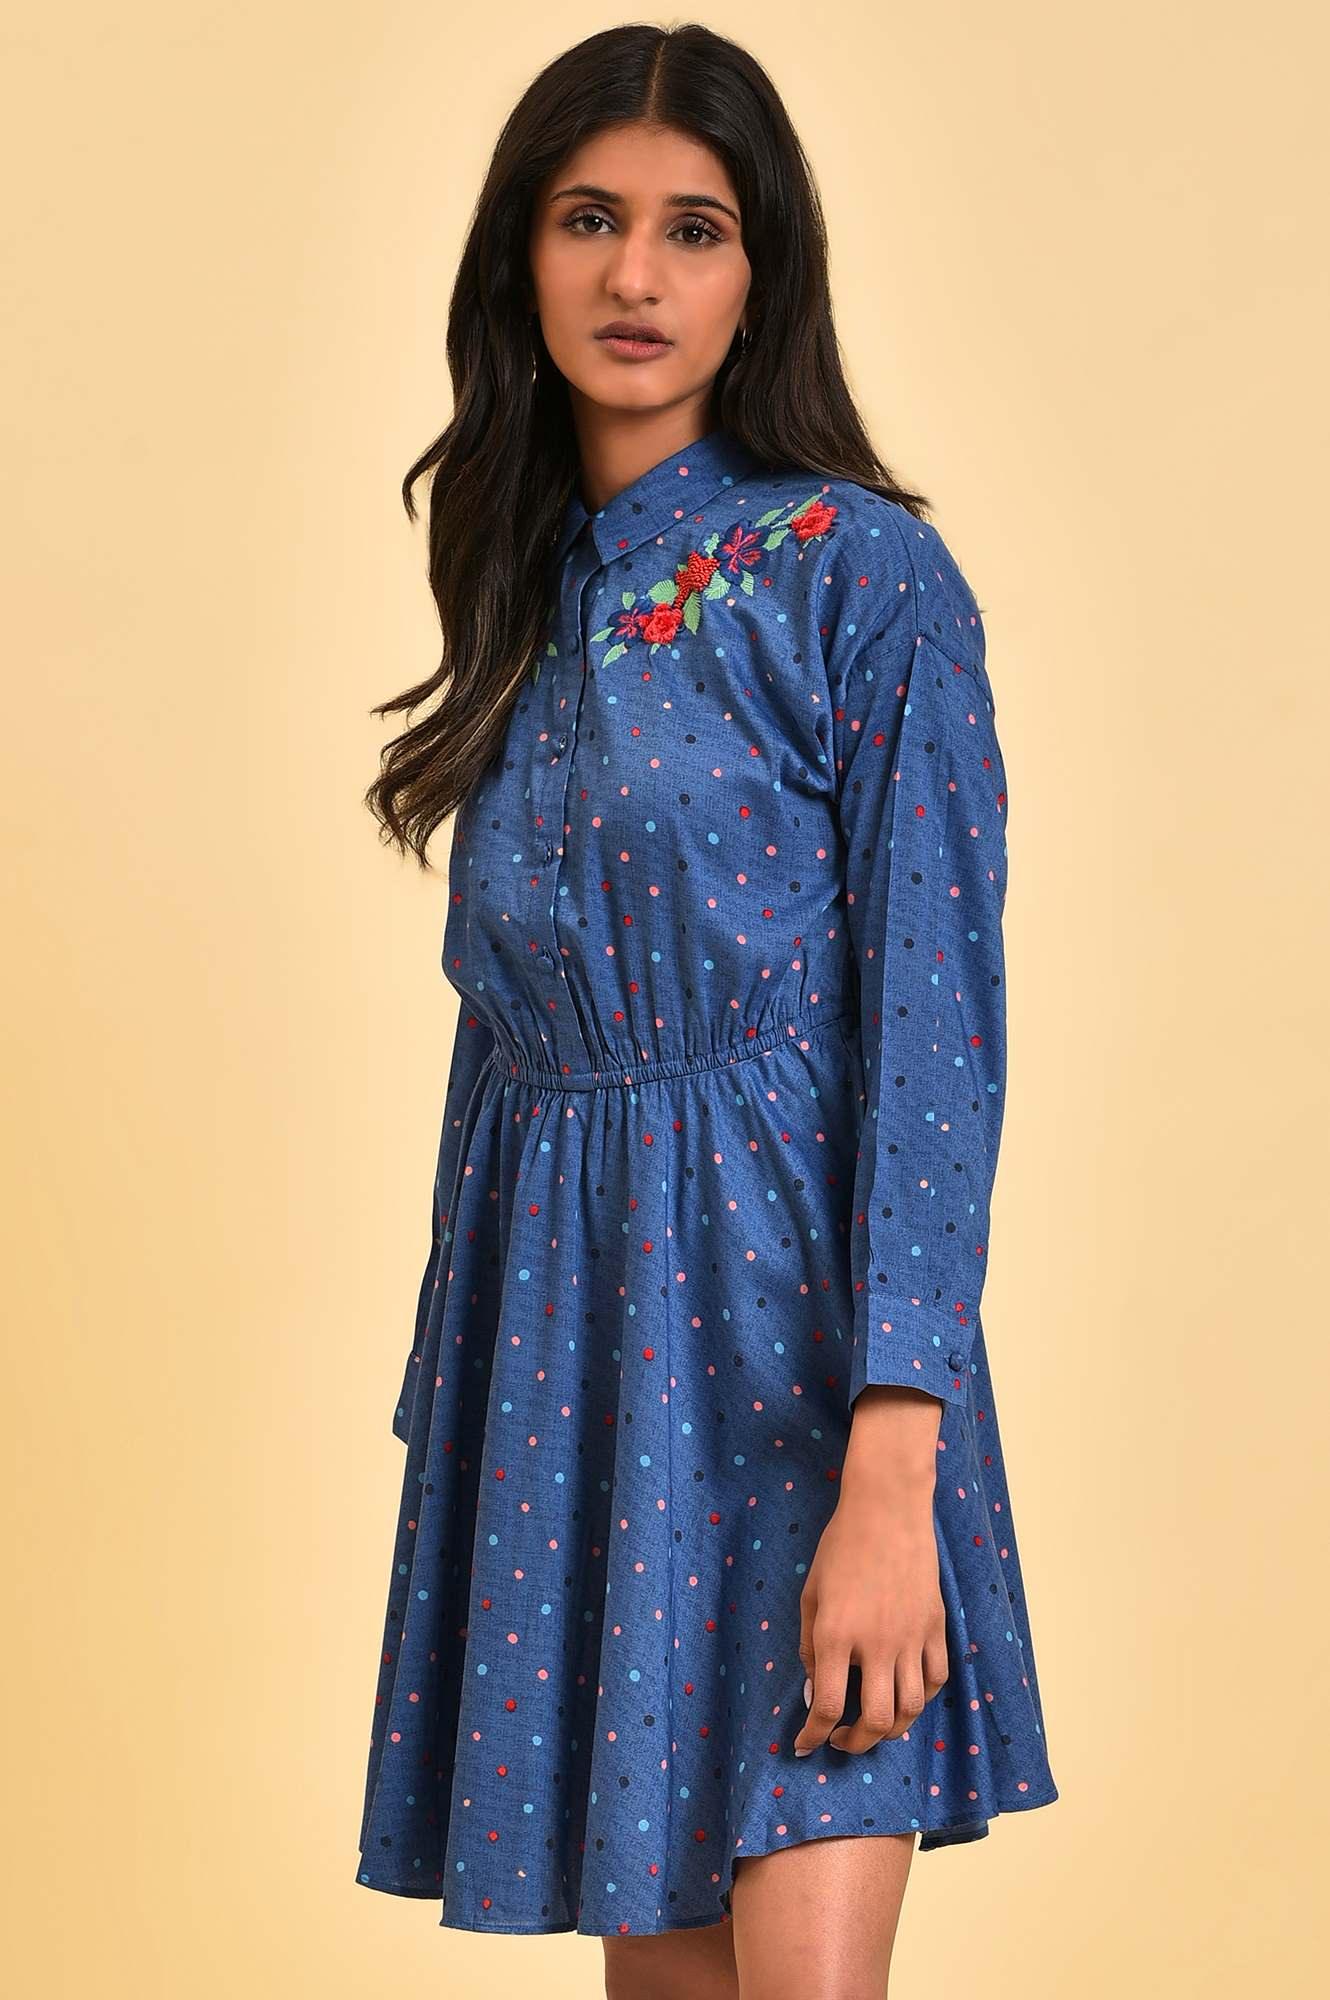 Blue Polka Dot Embroidered Dress - wforwoman